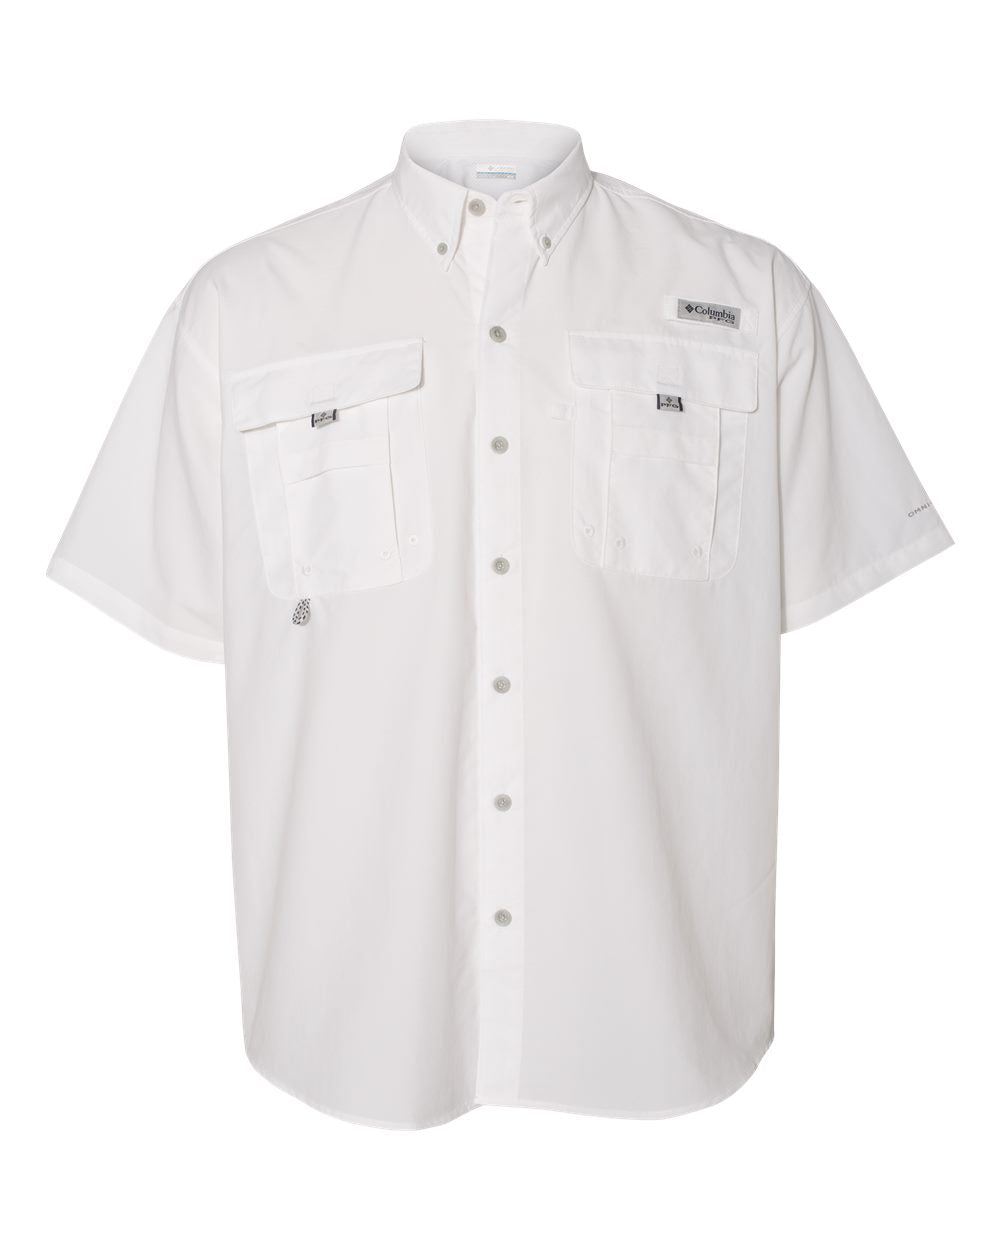 Columbia Men's Bahama II Short Sleeve Fishing Shirt (White, Small)